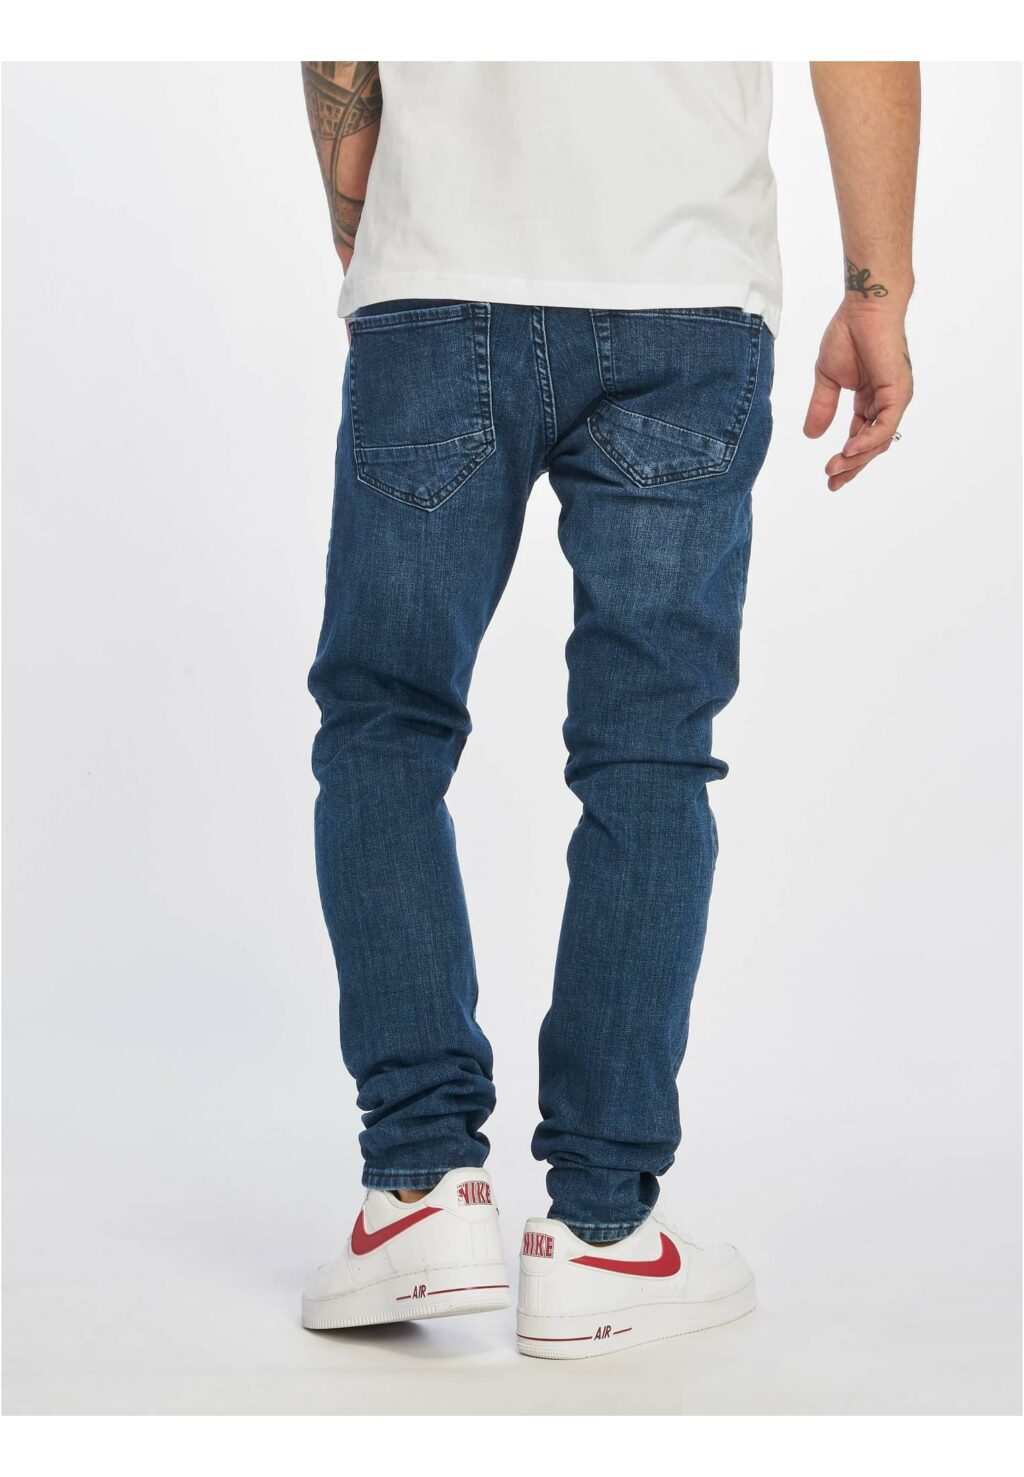 Skom Slim Fit Jeans Washed denimblue DFJS102